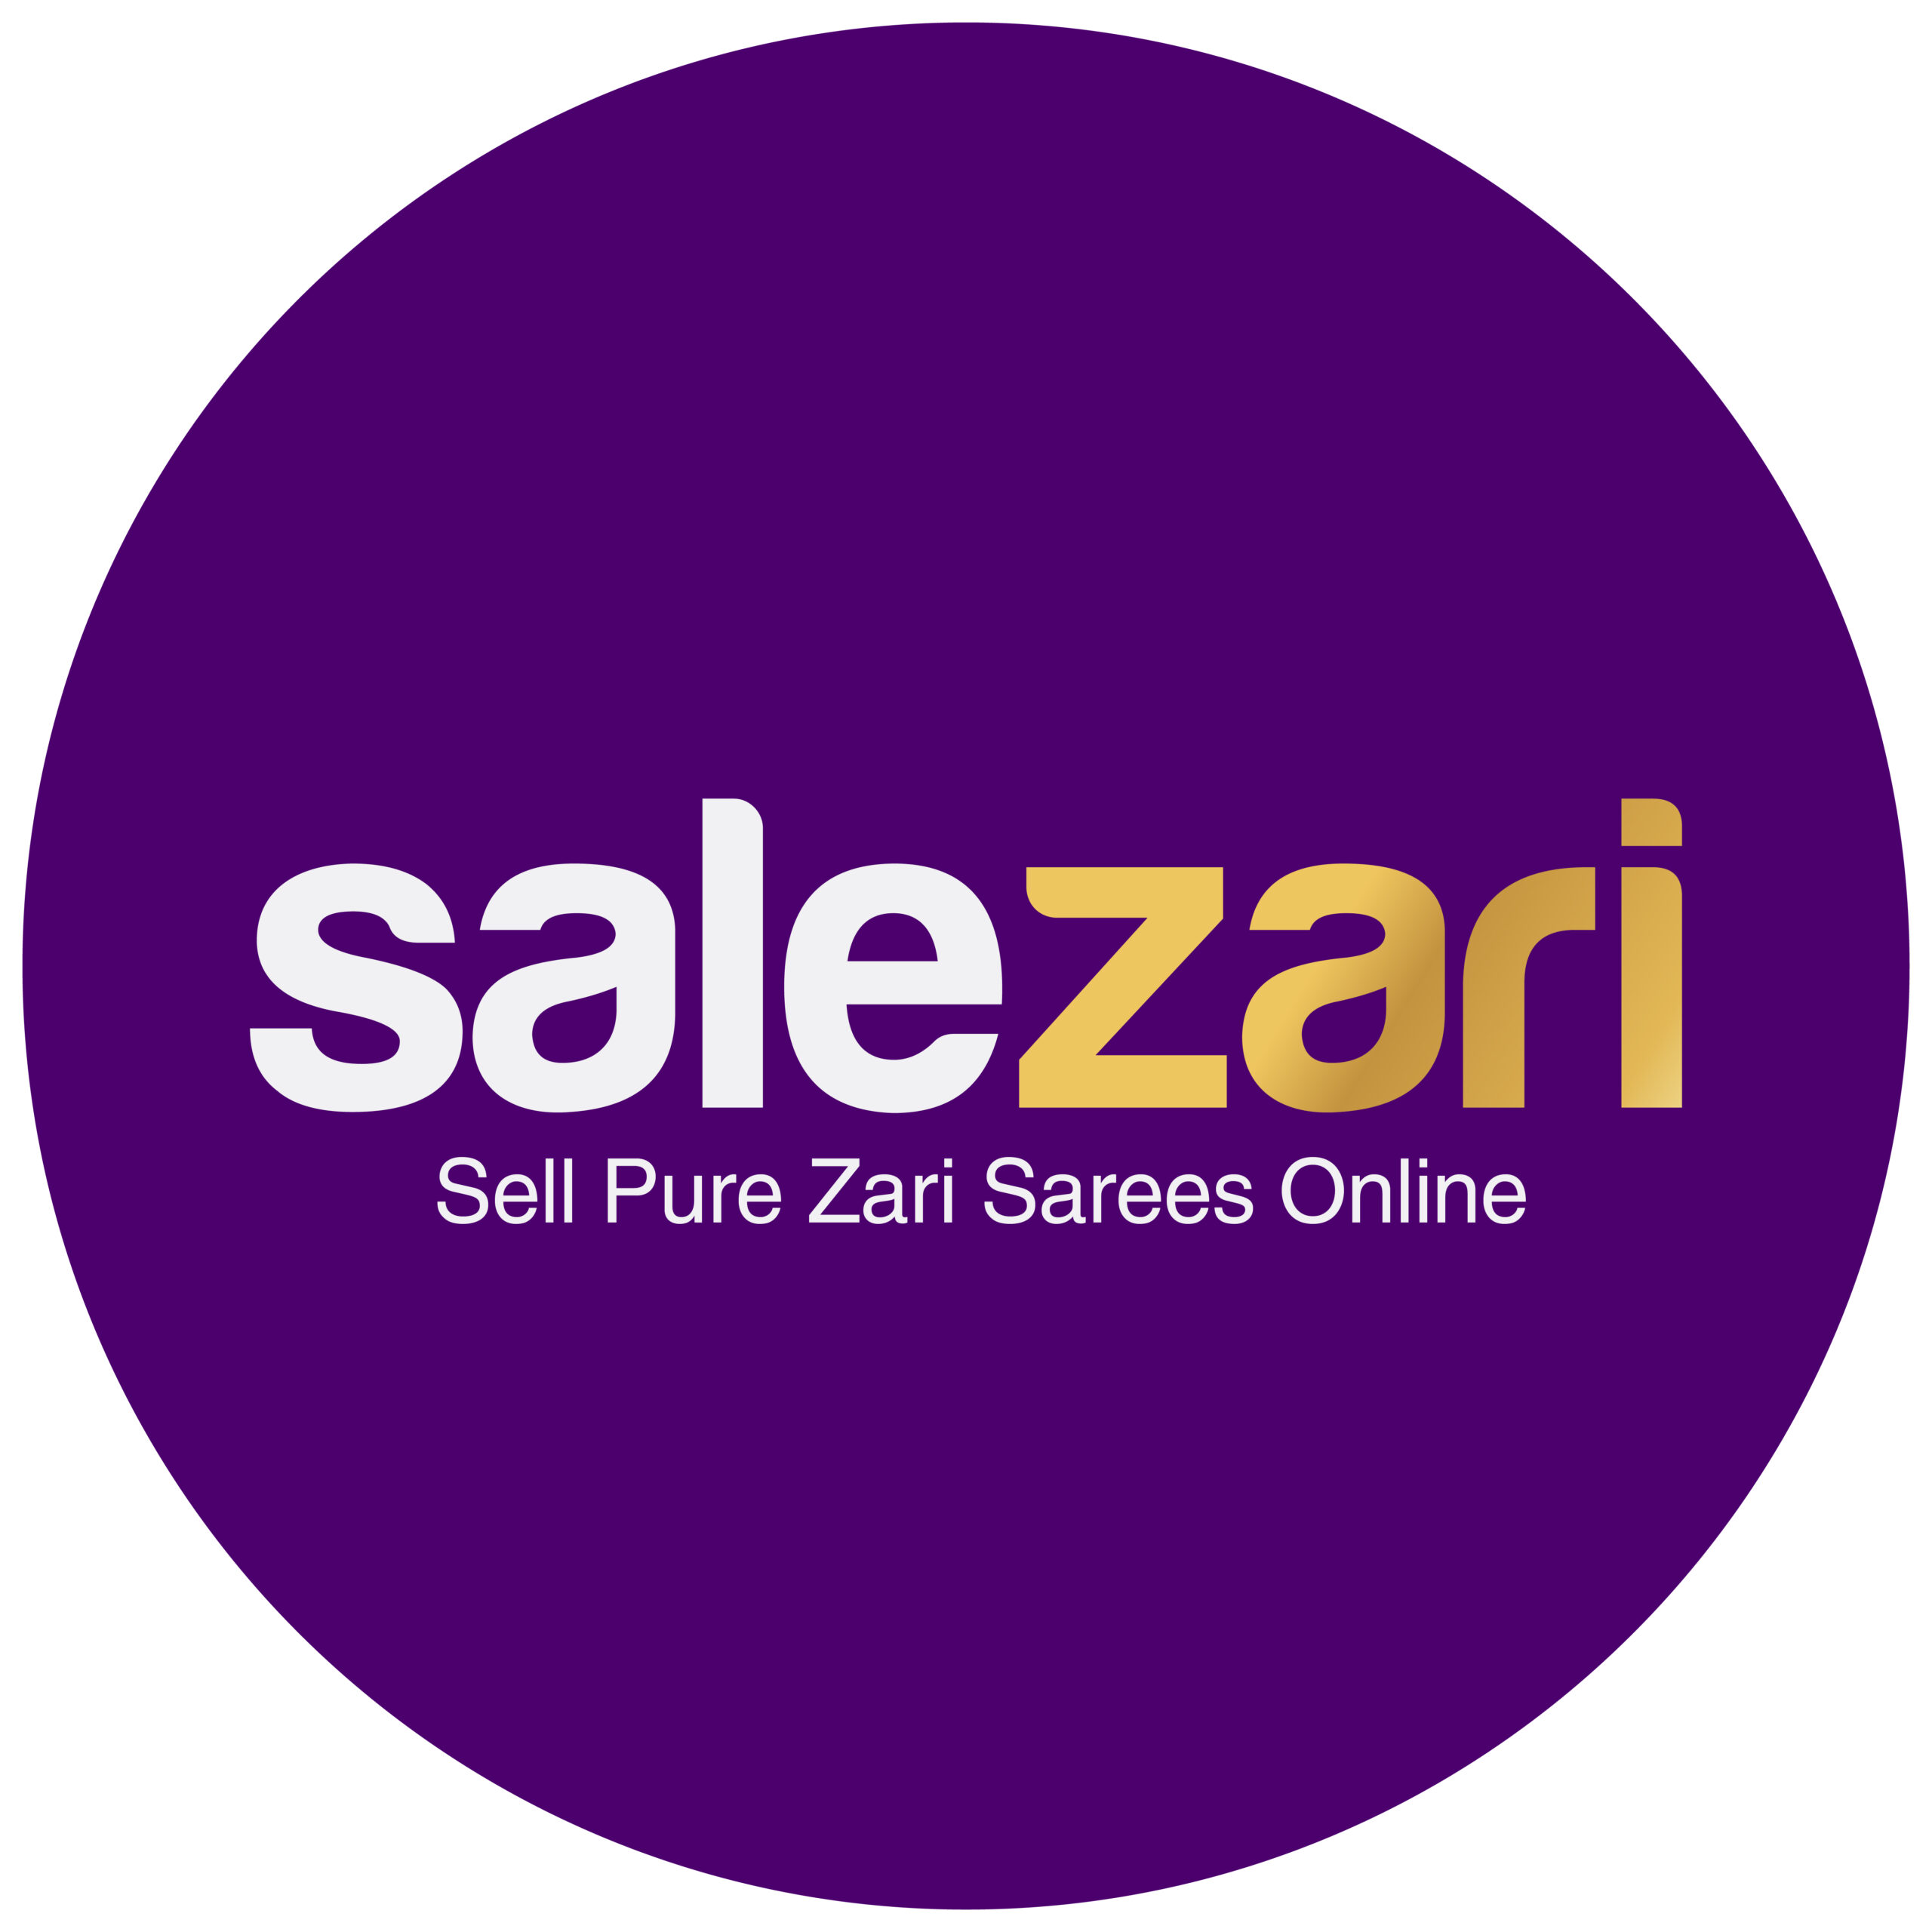 Sale Zari – Sell Pure Zari Sarees Online